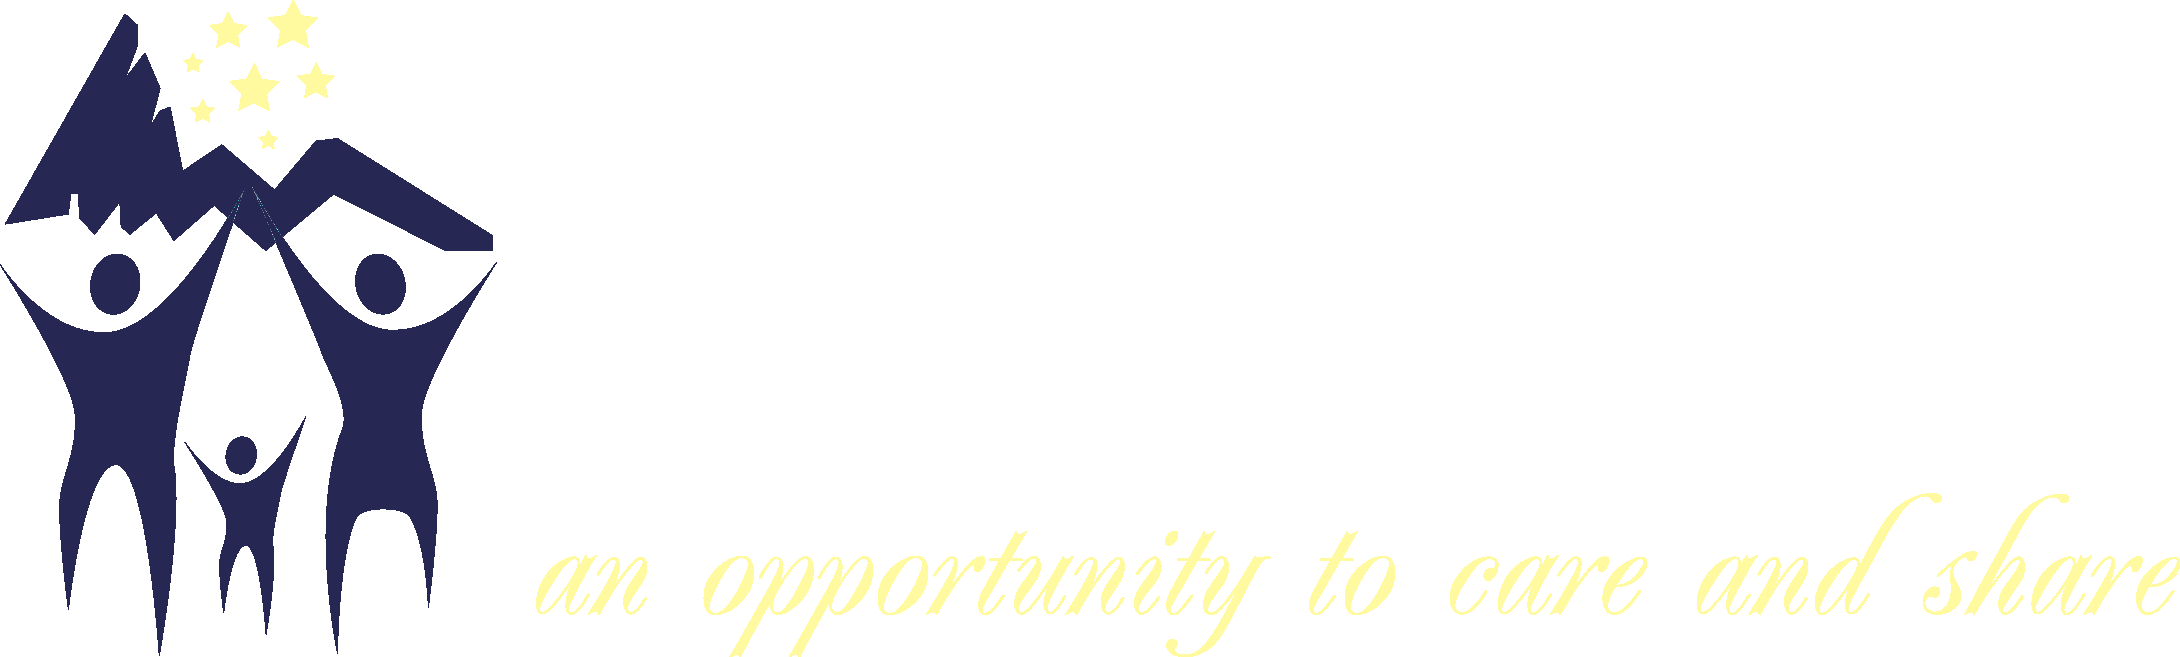 Nelson County Community Fund